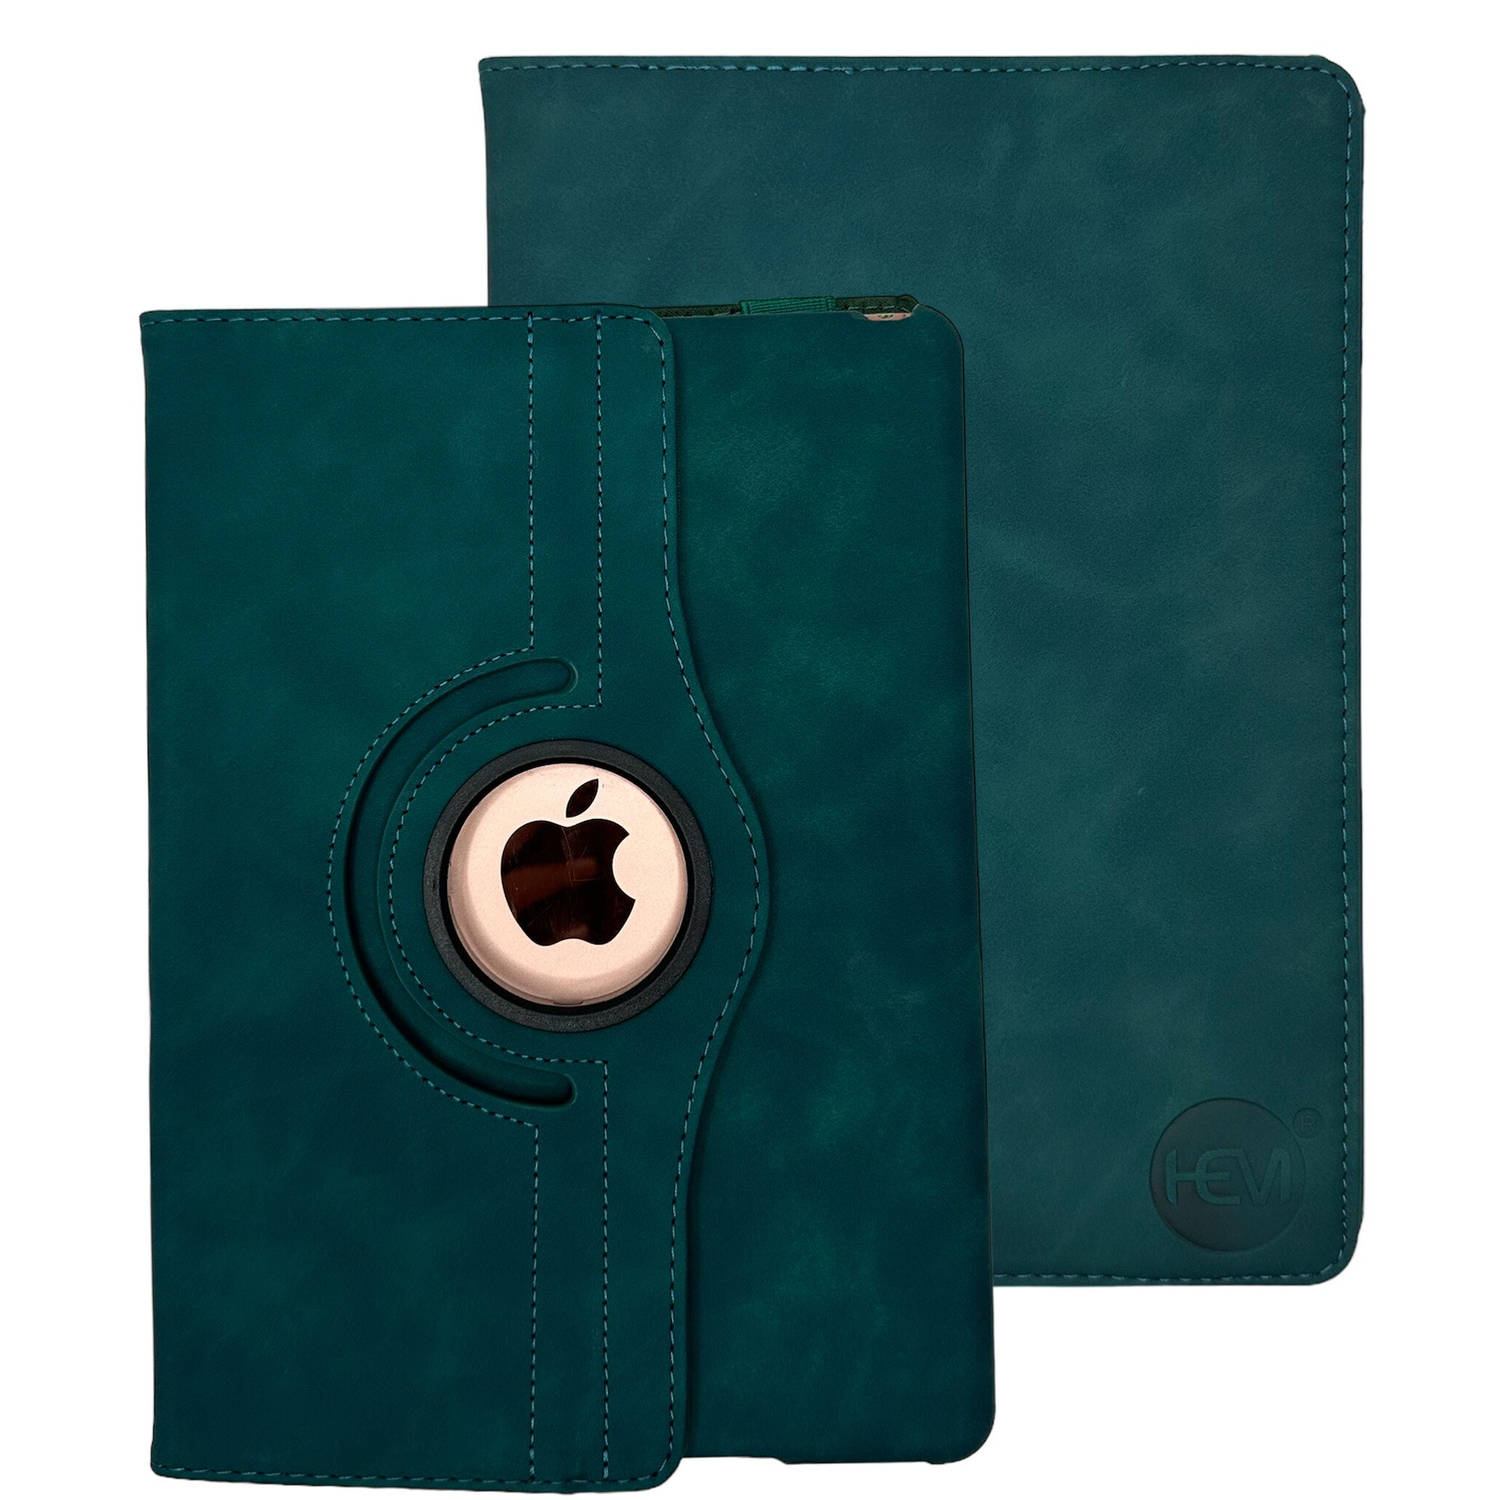 HEM Silky Green iPad hoes voor iPad 2017-2018 iPad Air-Air 2 9.7 inch Draaibare Autowake Cover Met S